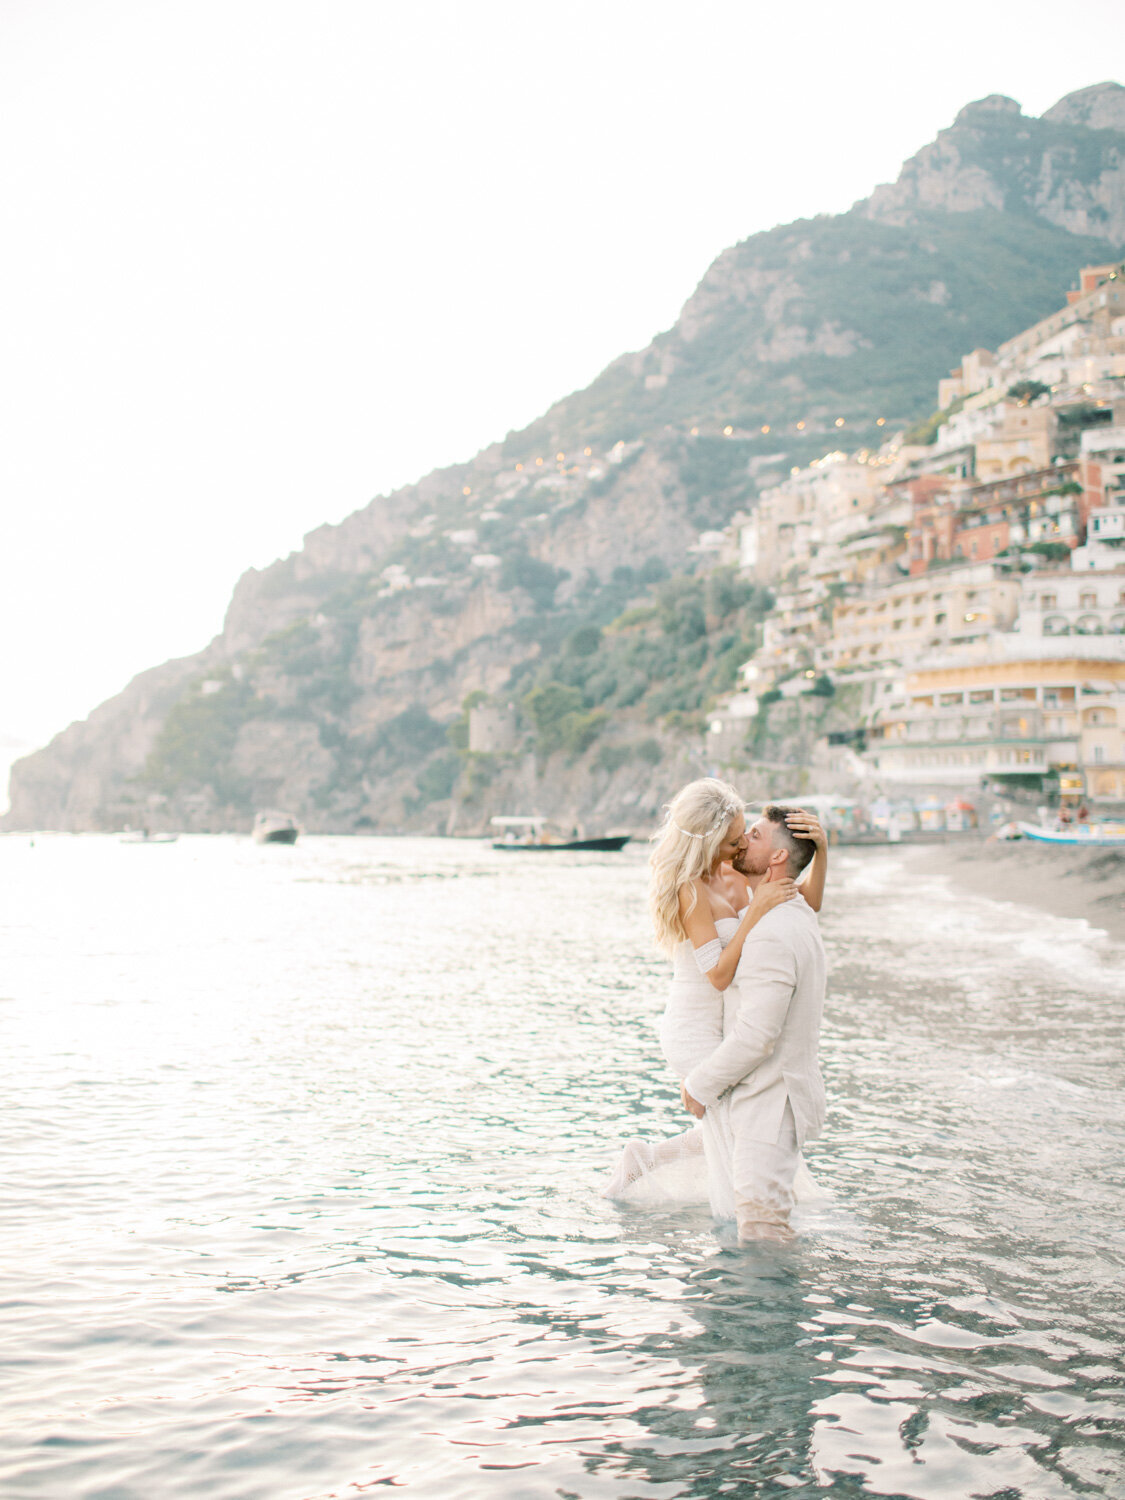 Wedding Photographer in Positano